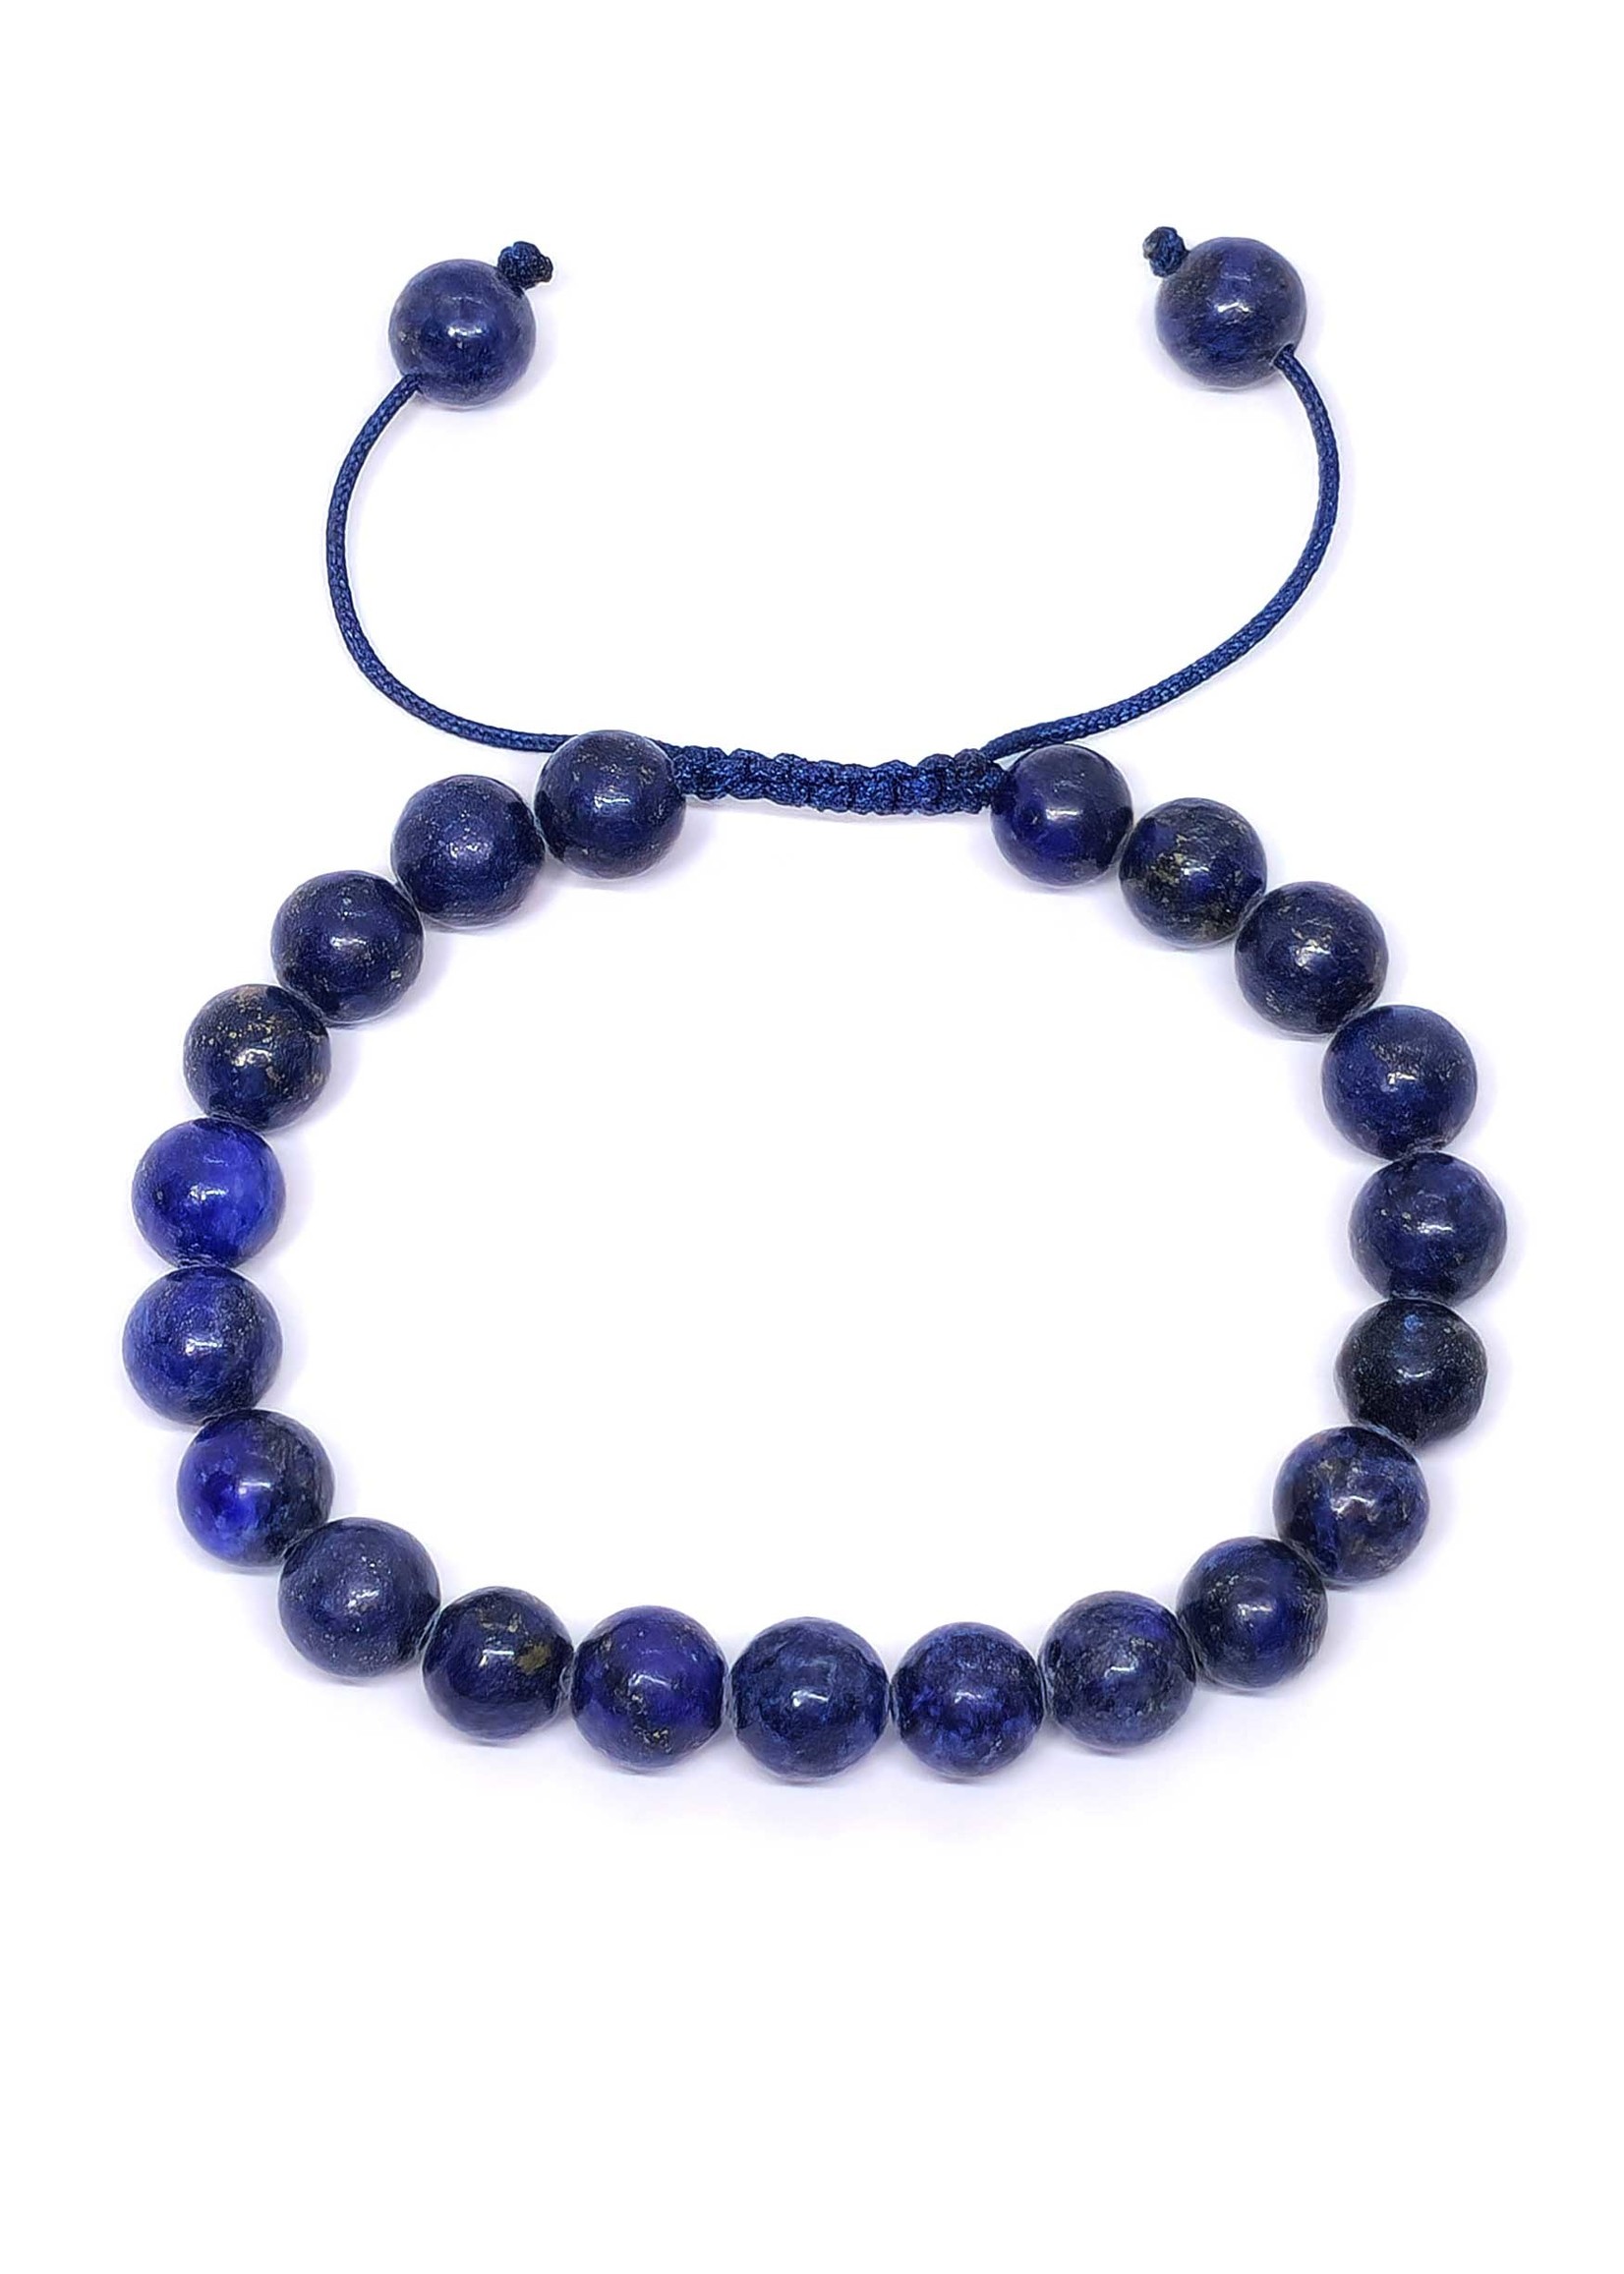 Lapis Lazuli Bracelet with Adjustable Size